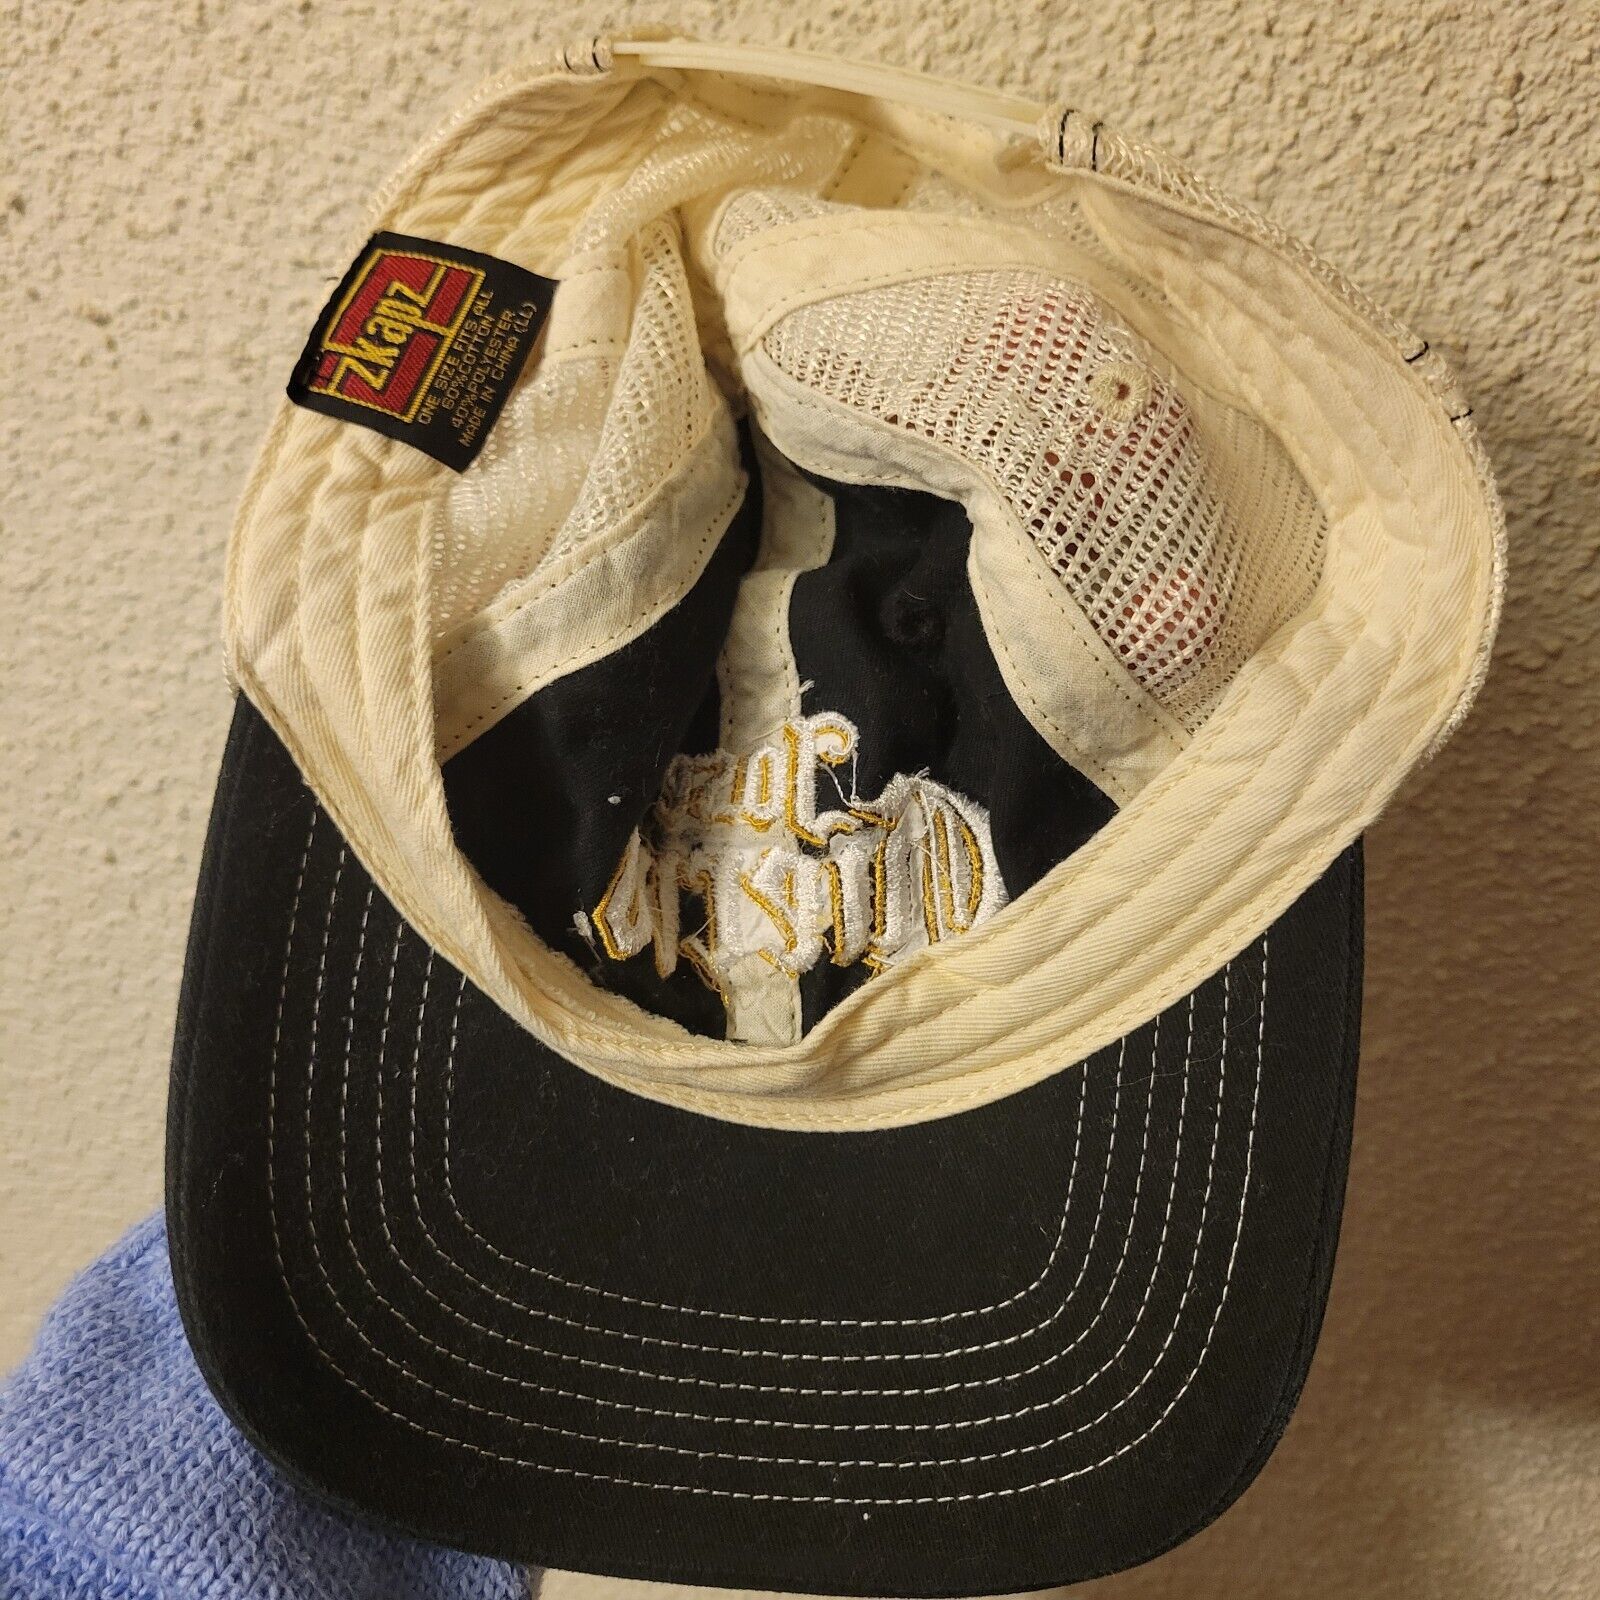 Jose Cuervo Vintage Trucker Hat ZKaps Snapback